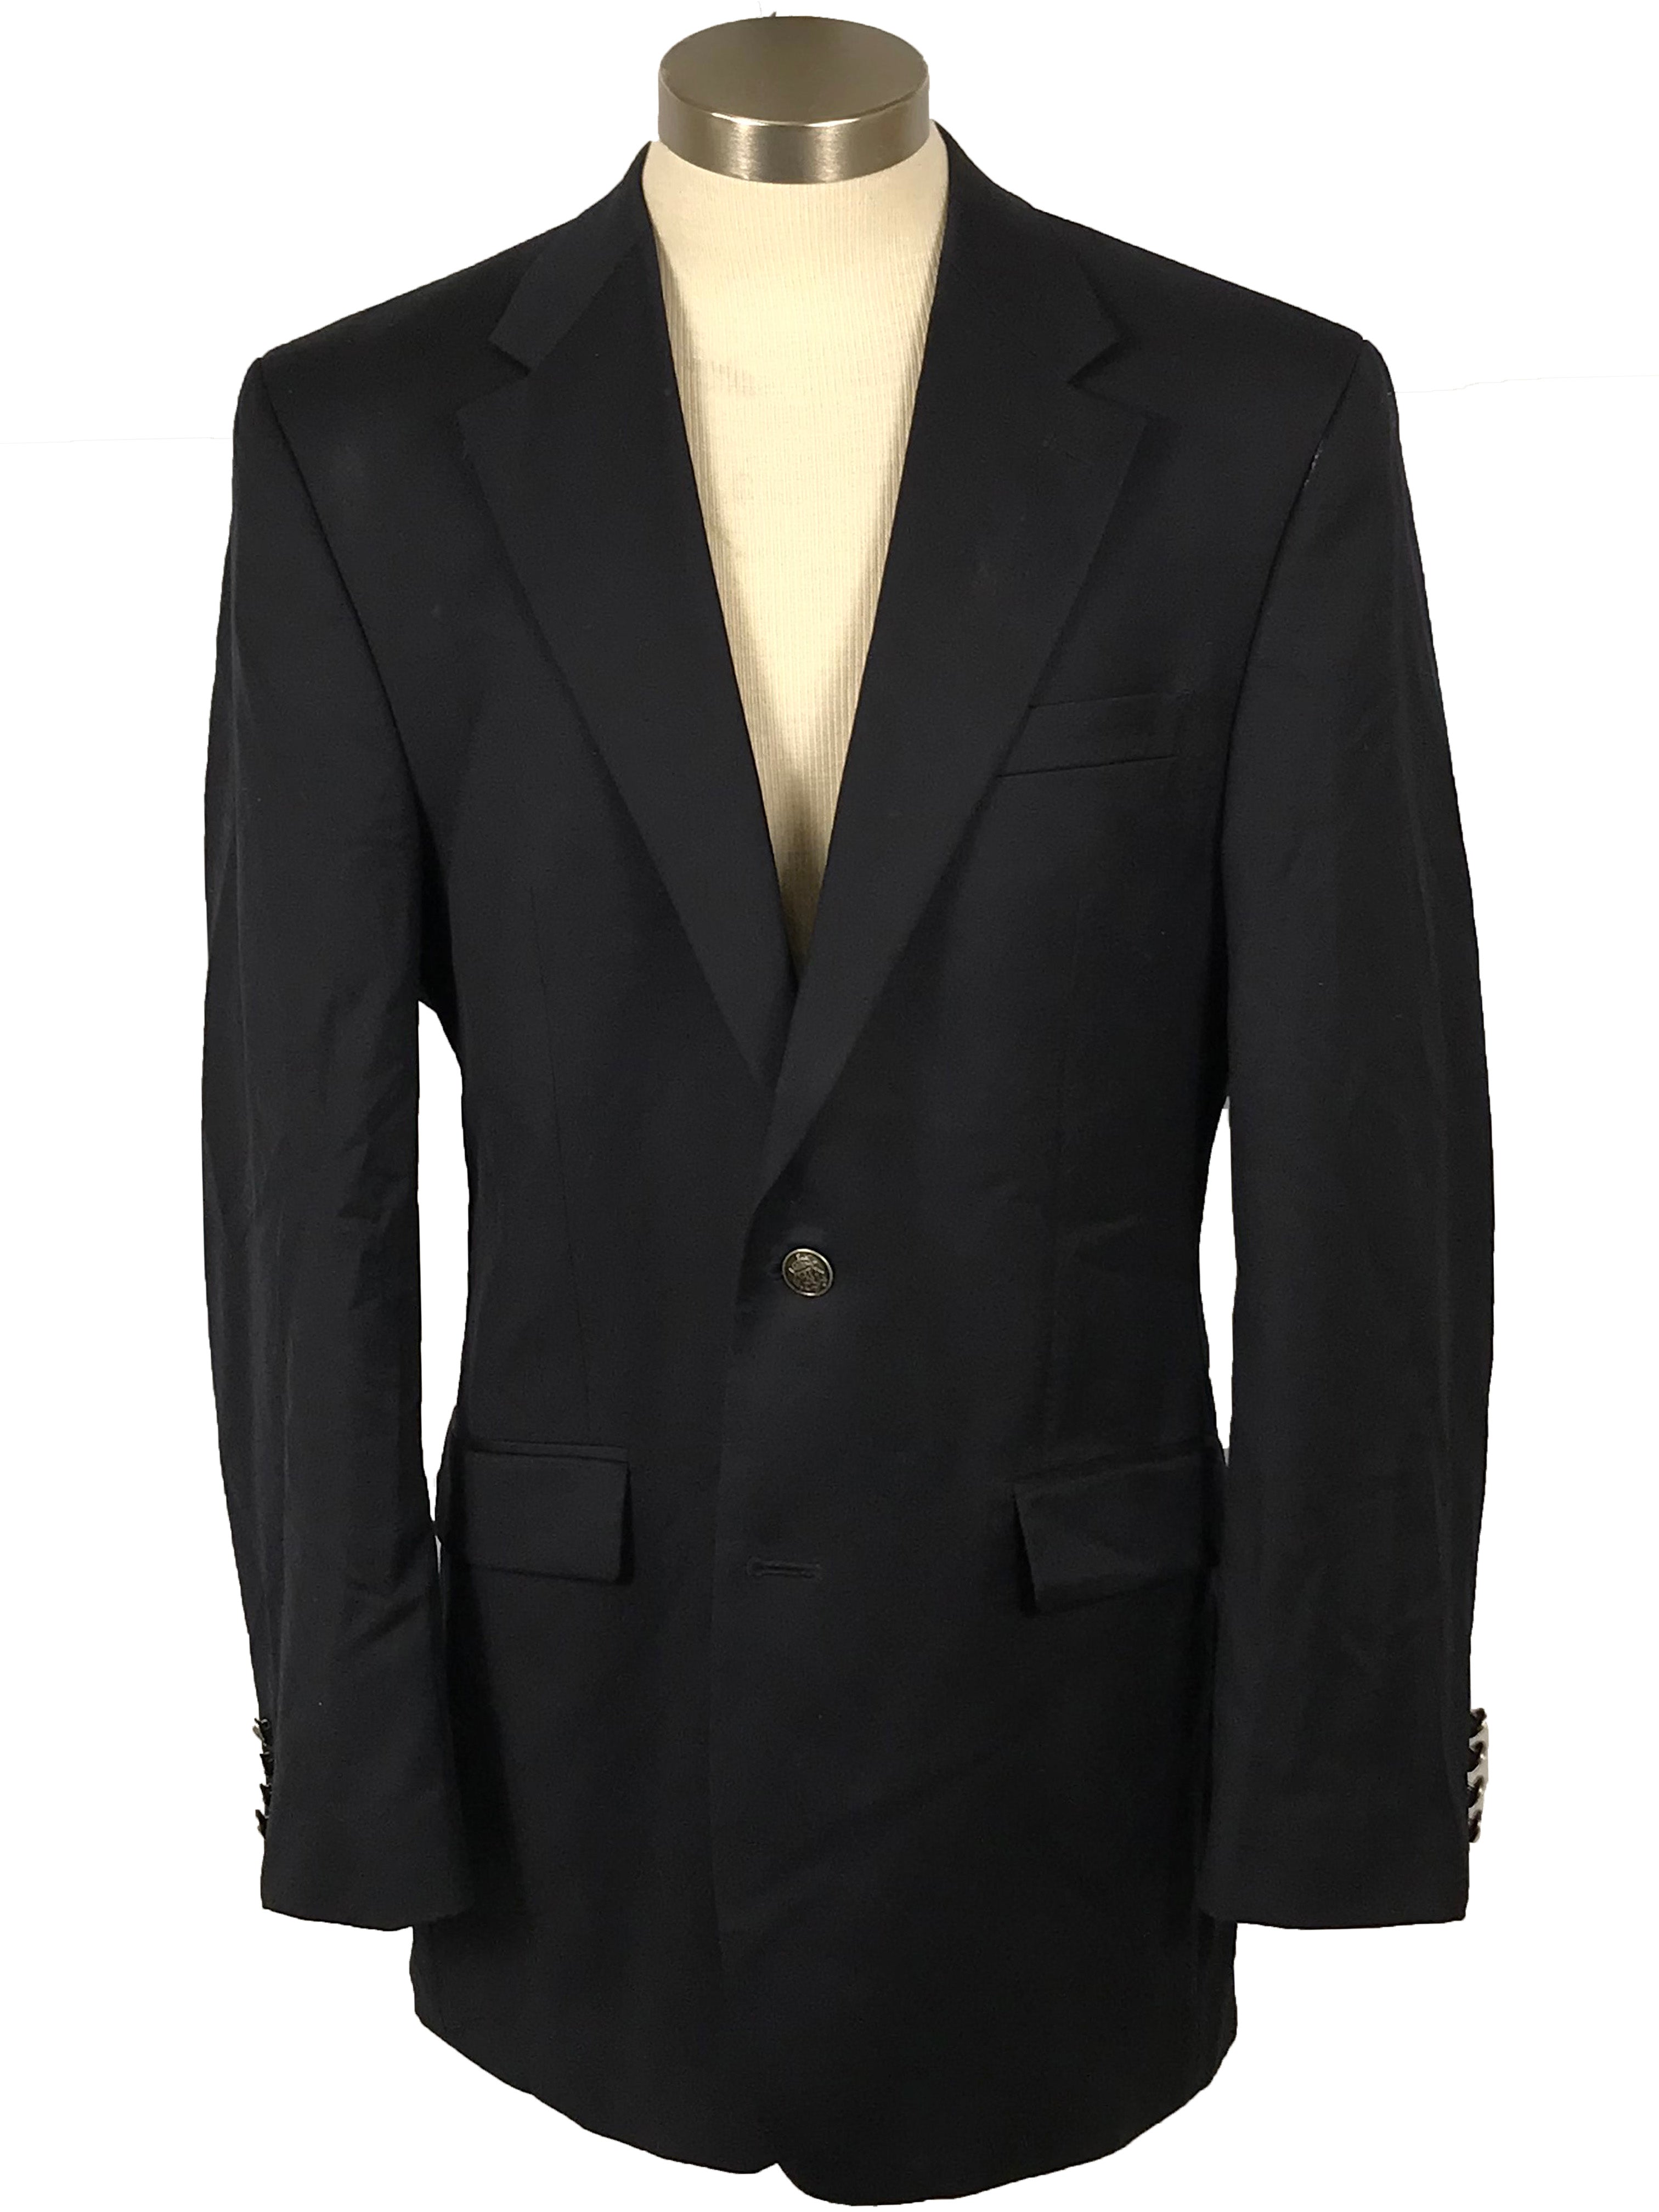 Michael Kors Black Suit Jacket  Teen size 14R for Communion Confirmation   eBay